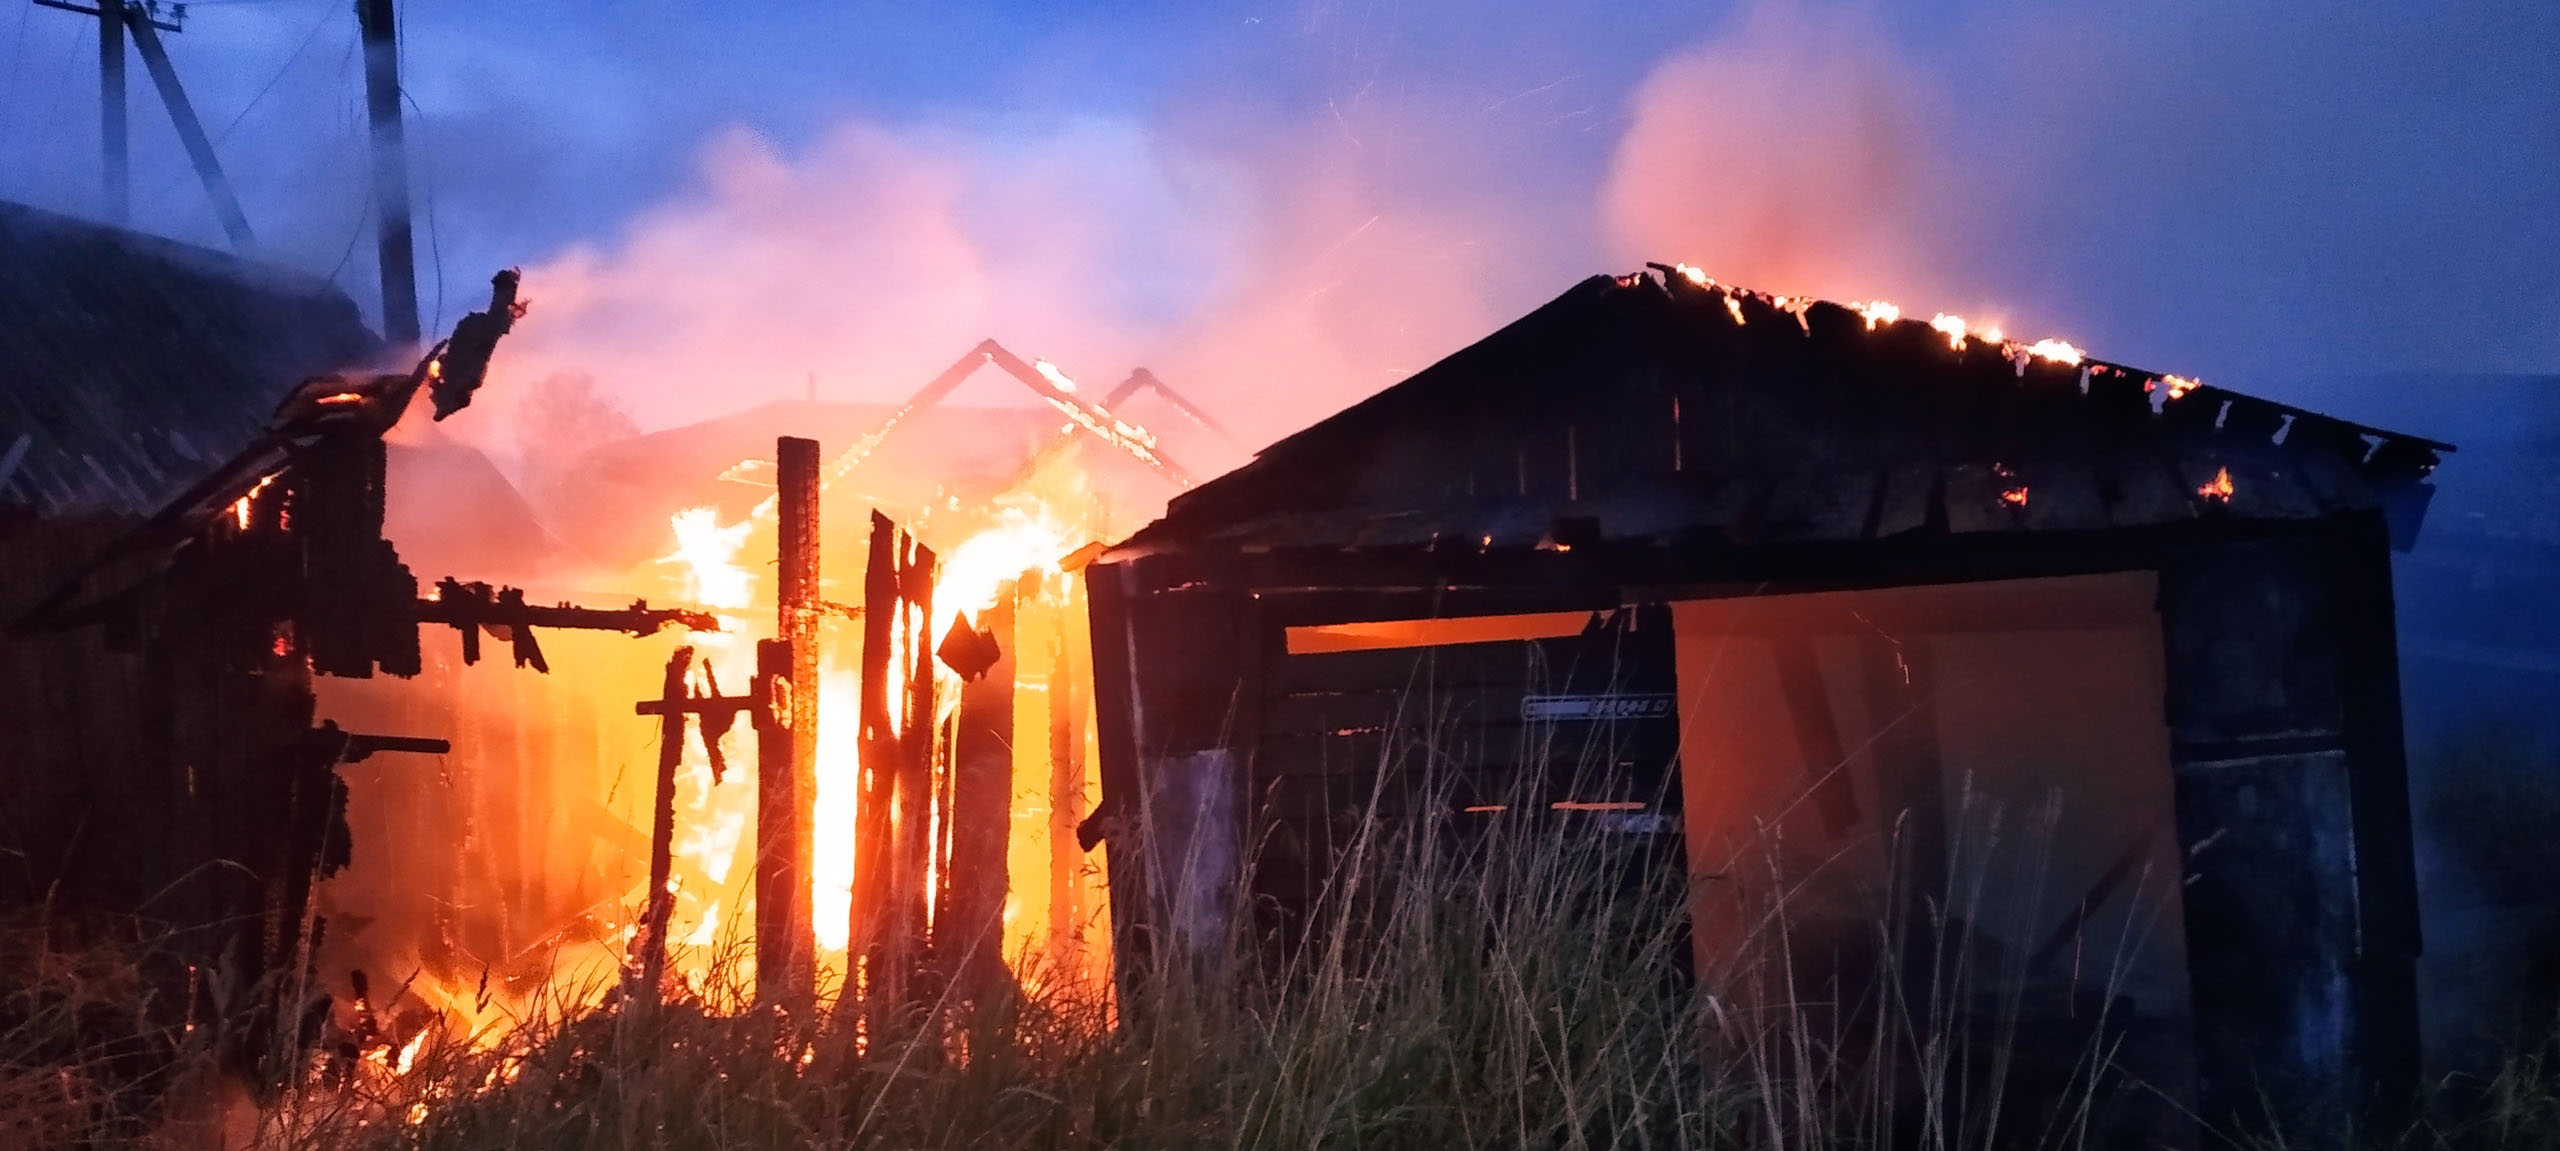 Пожар в районе Карелии потушили за 12 минут (ФОТО)